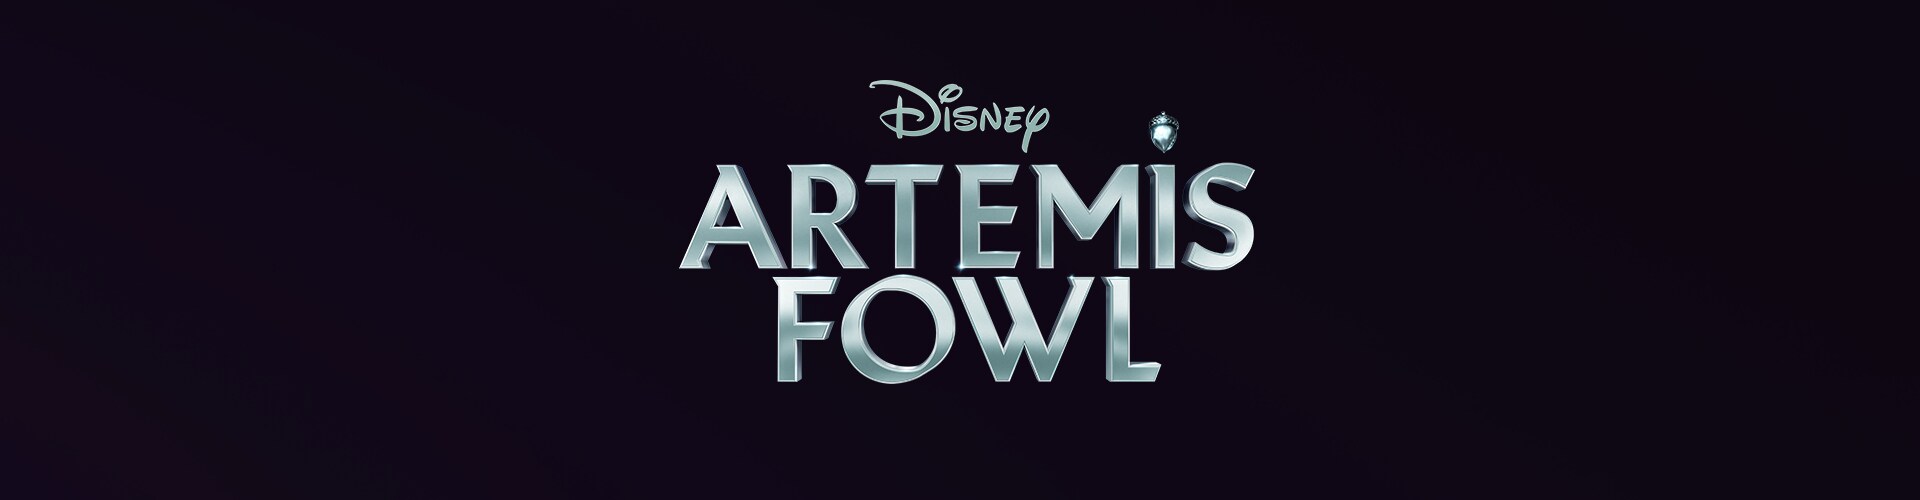 Artemis Fowl - logo header